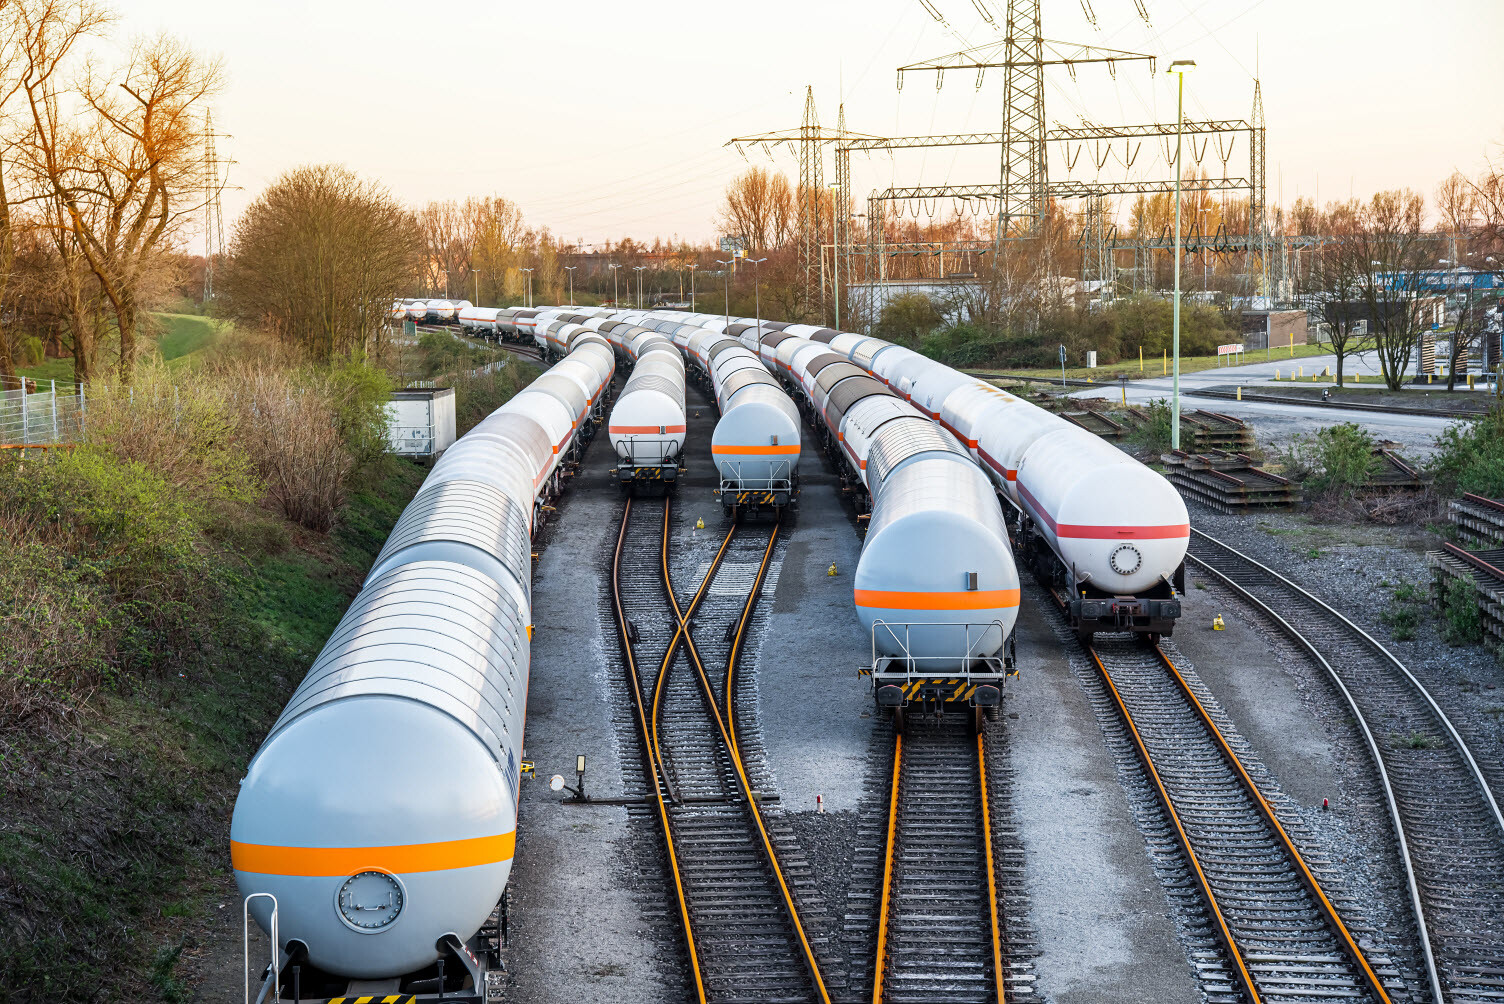 Train cars for Hazardous Materials - Shipping Hazardous Materials by Rail - Dangerous Goods by rail